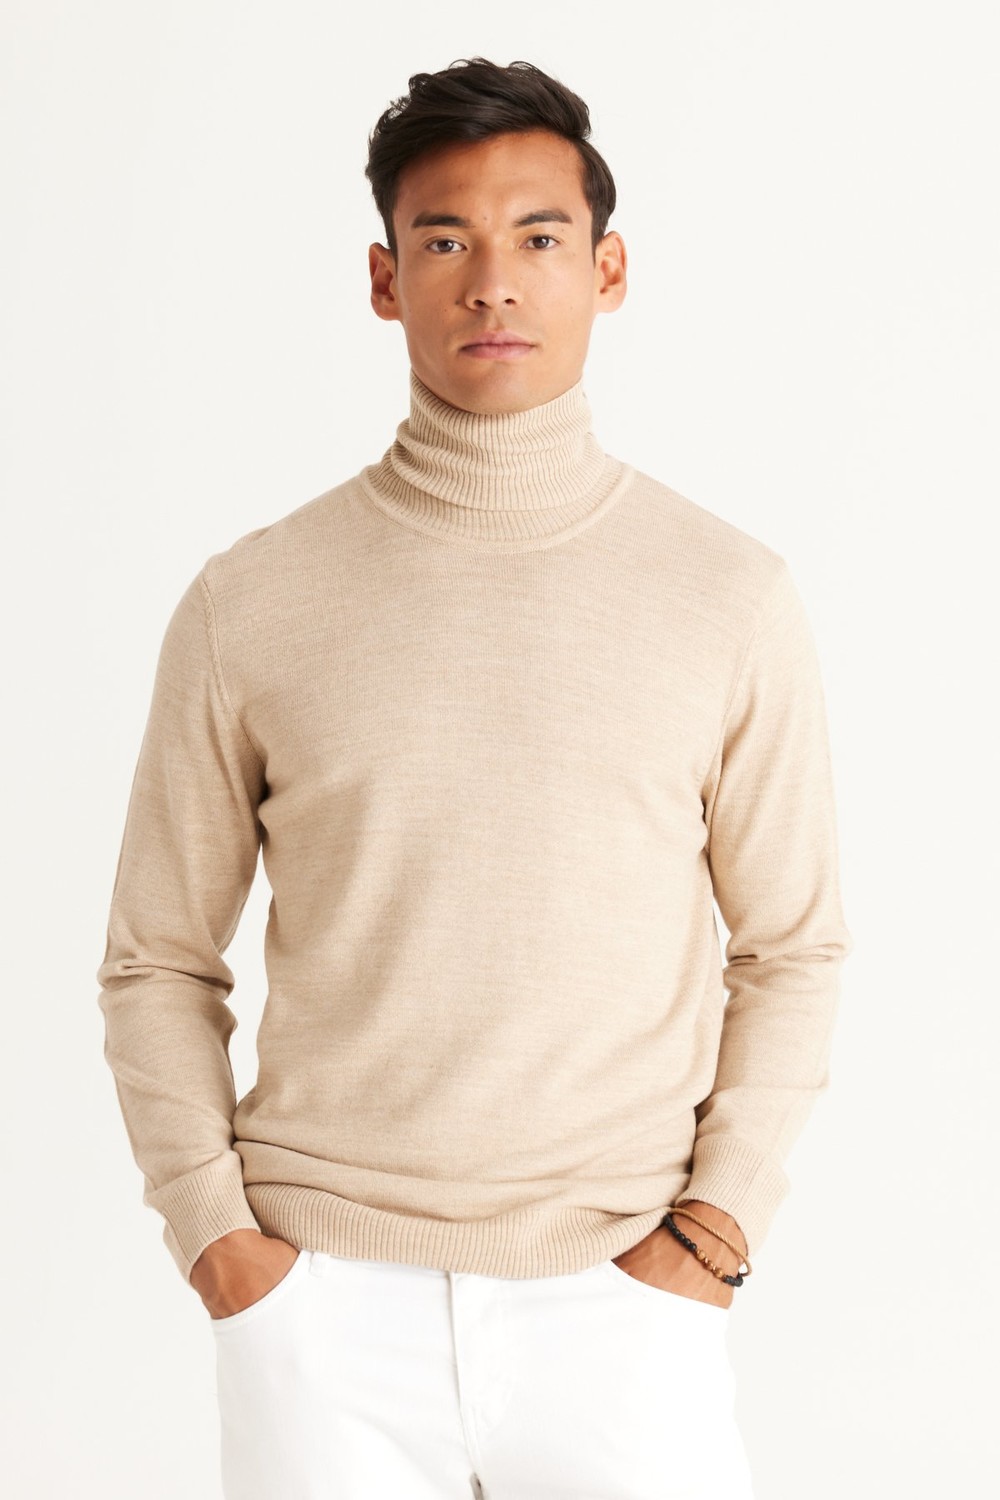 ALTINYILDIZ CLASSICS Men's Beige Standard Fit Normal Cut Anti-Pilling Full Turtleneck Knitwear Sweater.